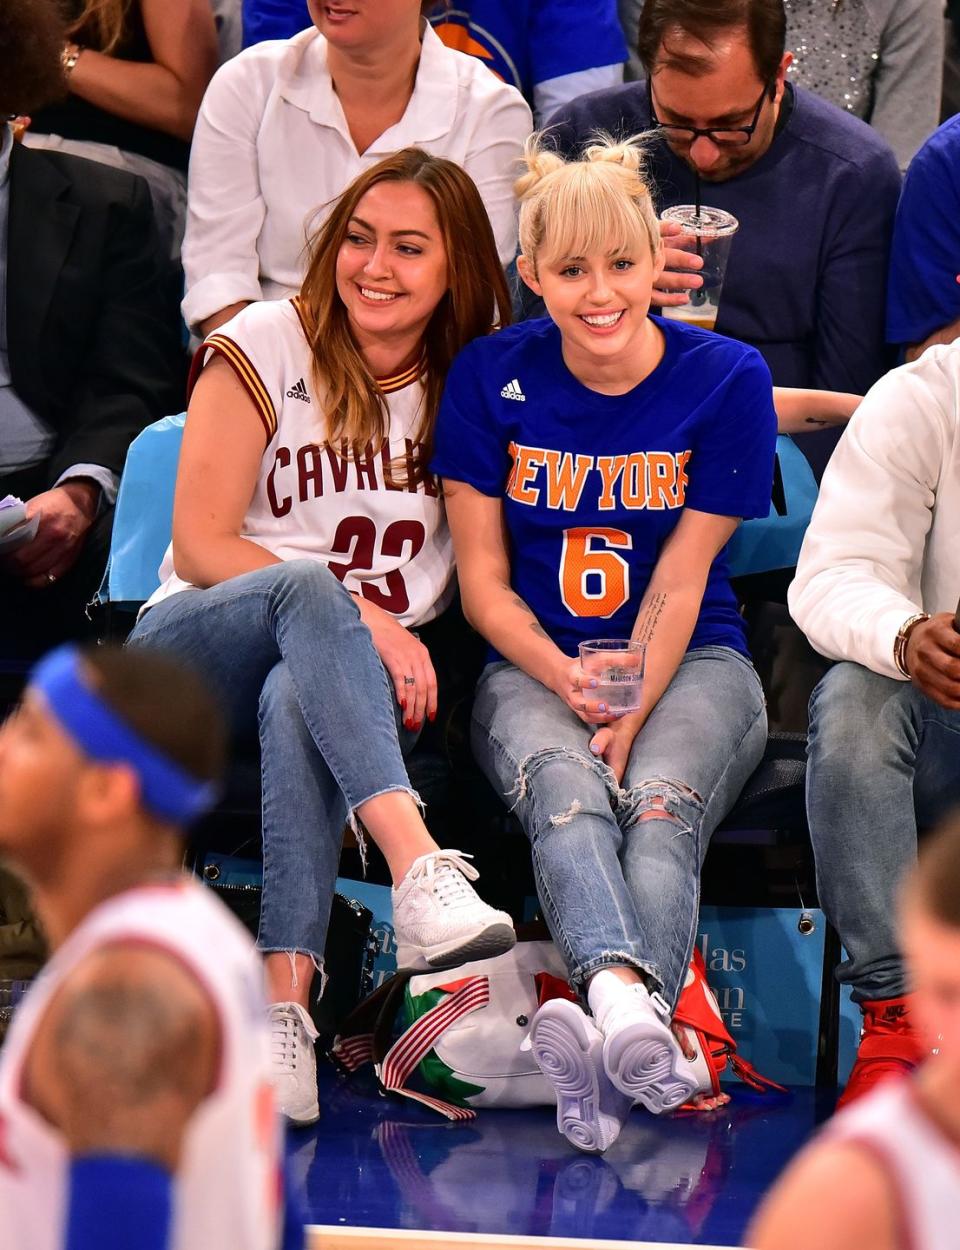 Brandi and Miley Cyrus